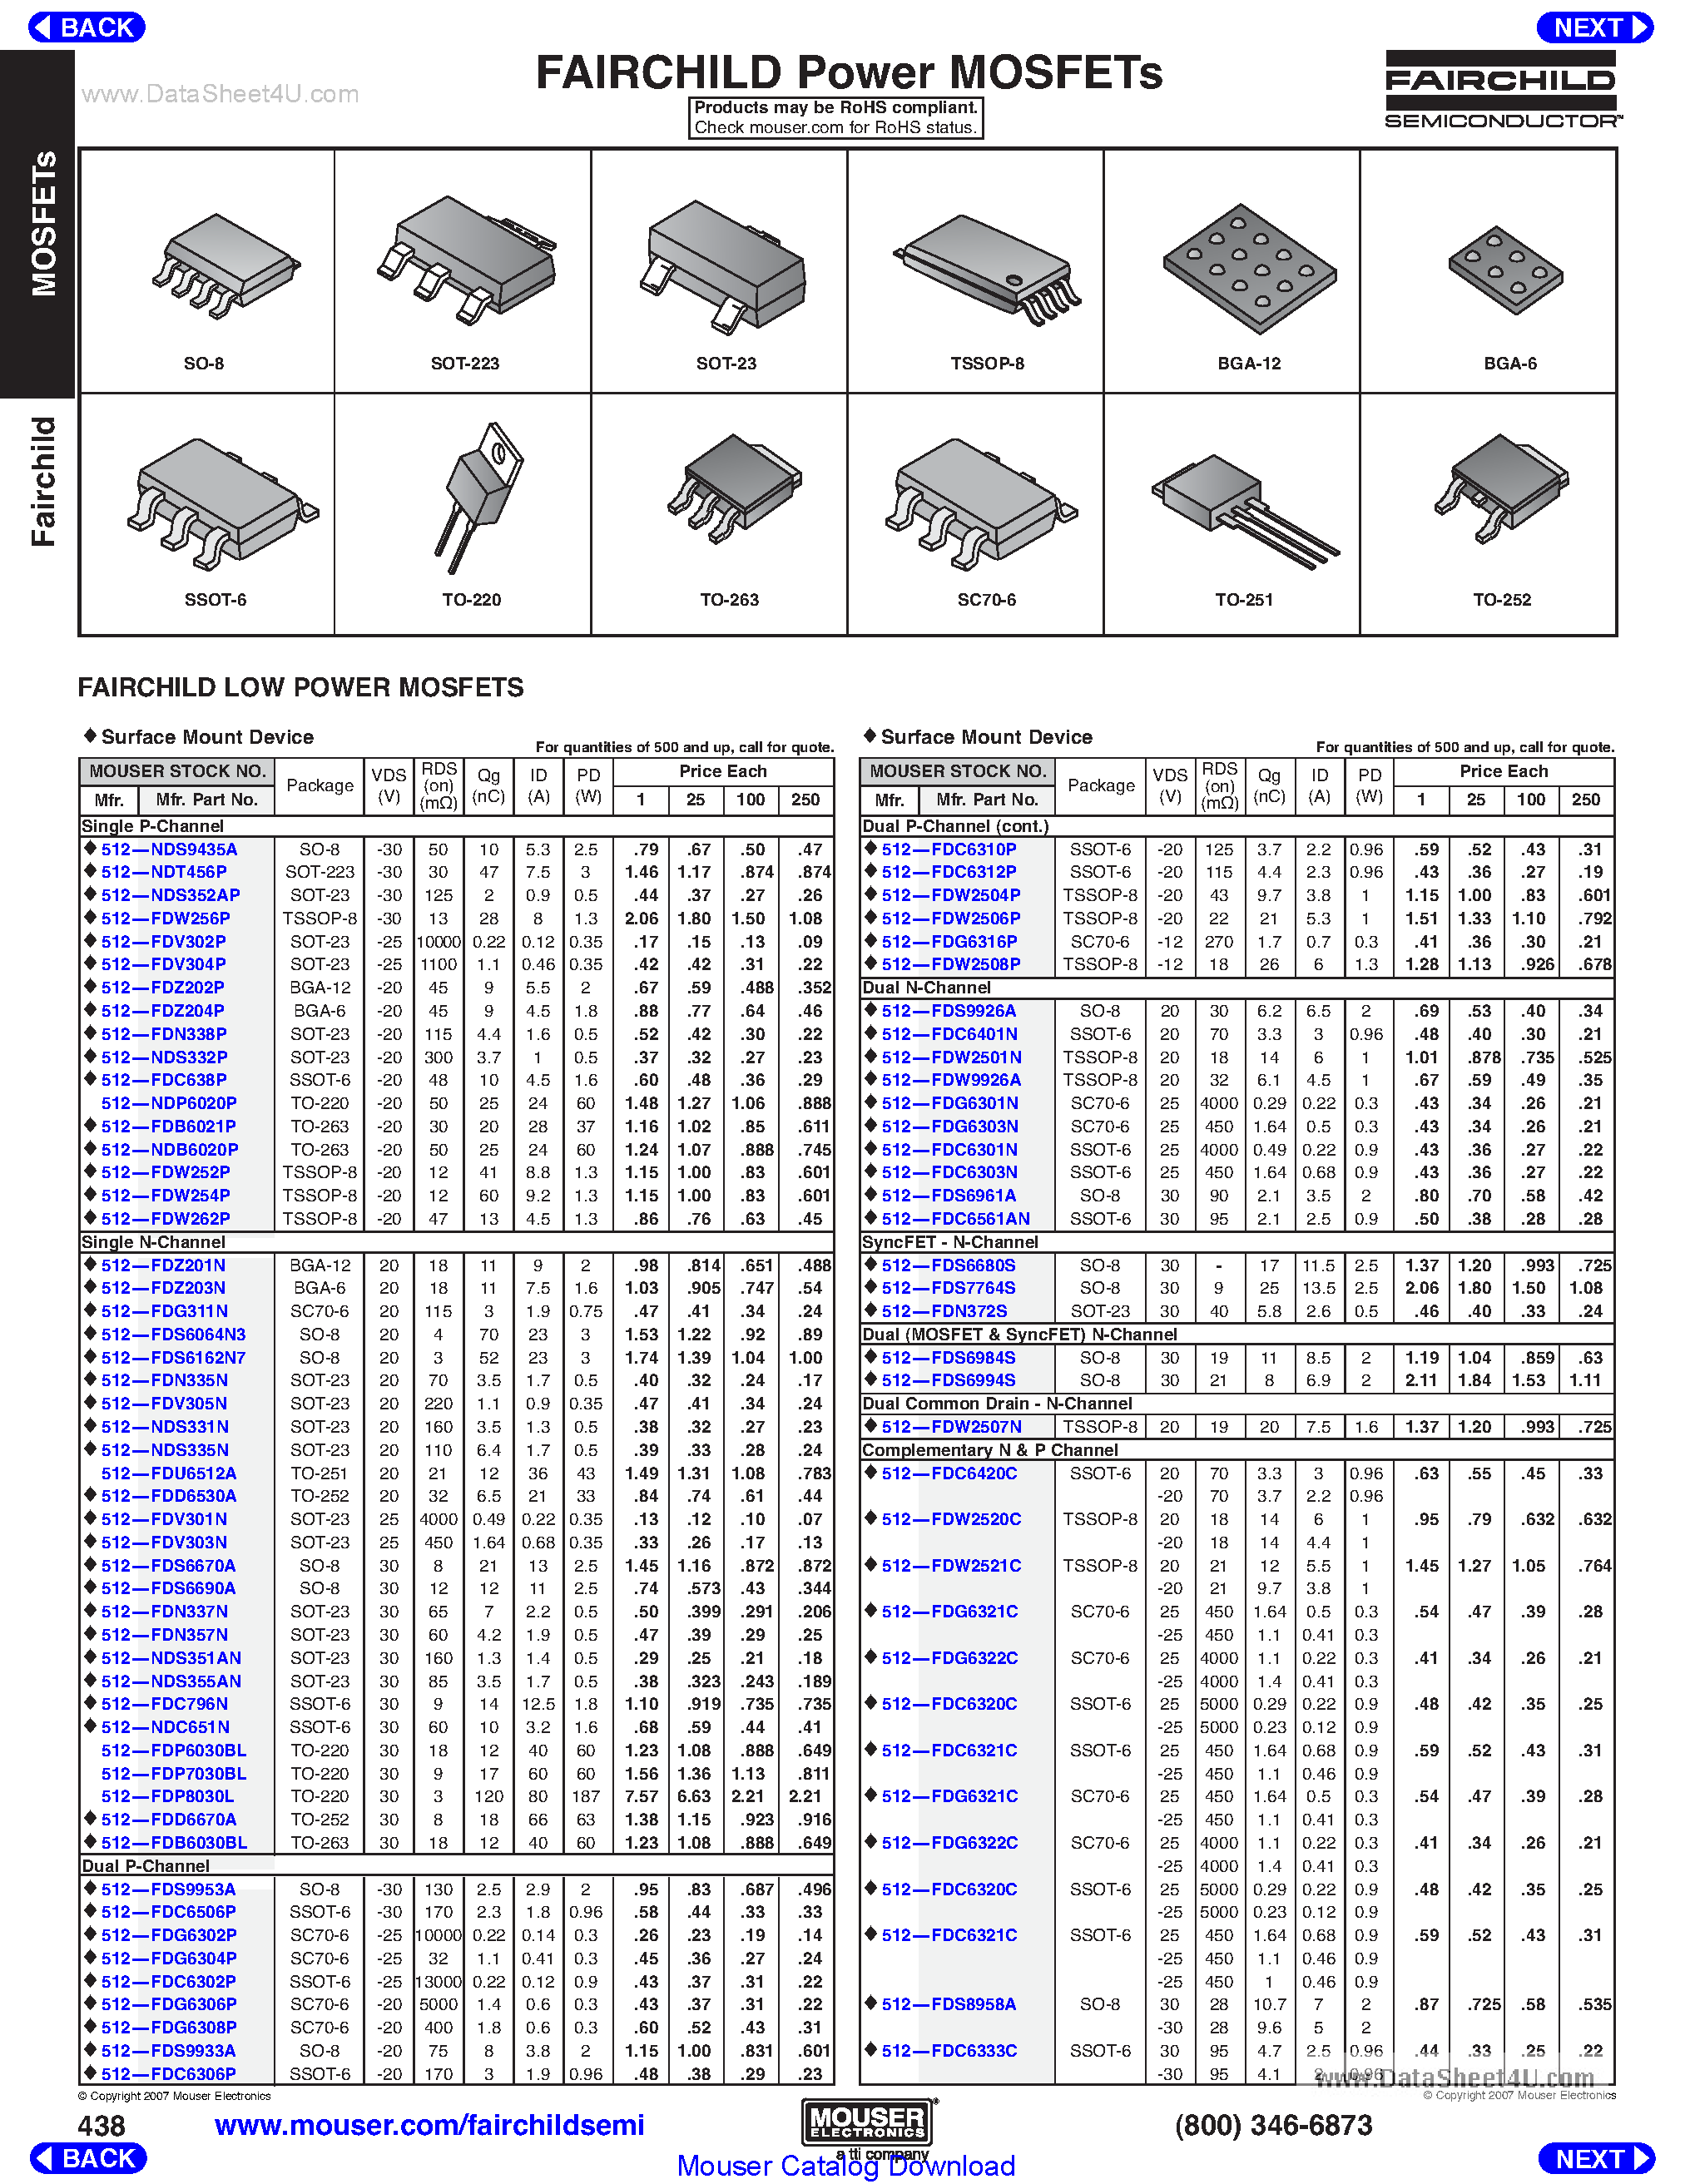 Даташит 512-FDDxxxxx - Low Power MOSFET страница 1